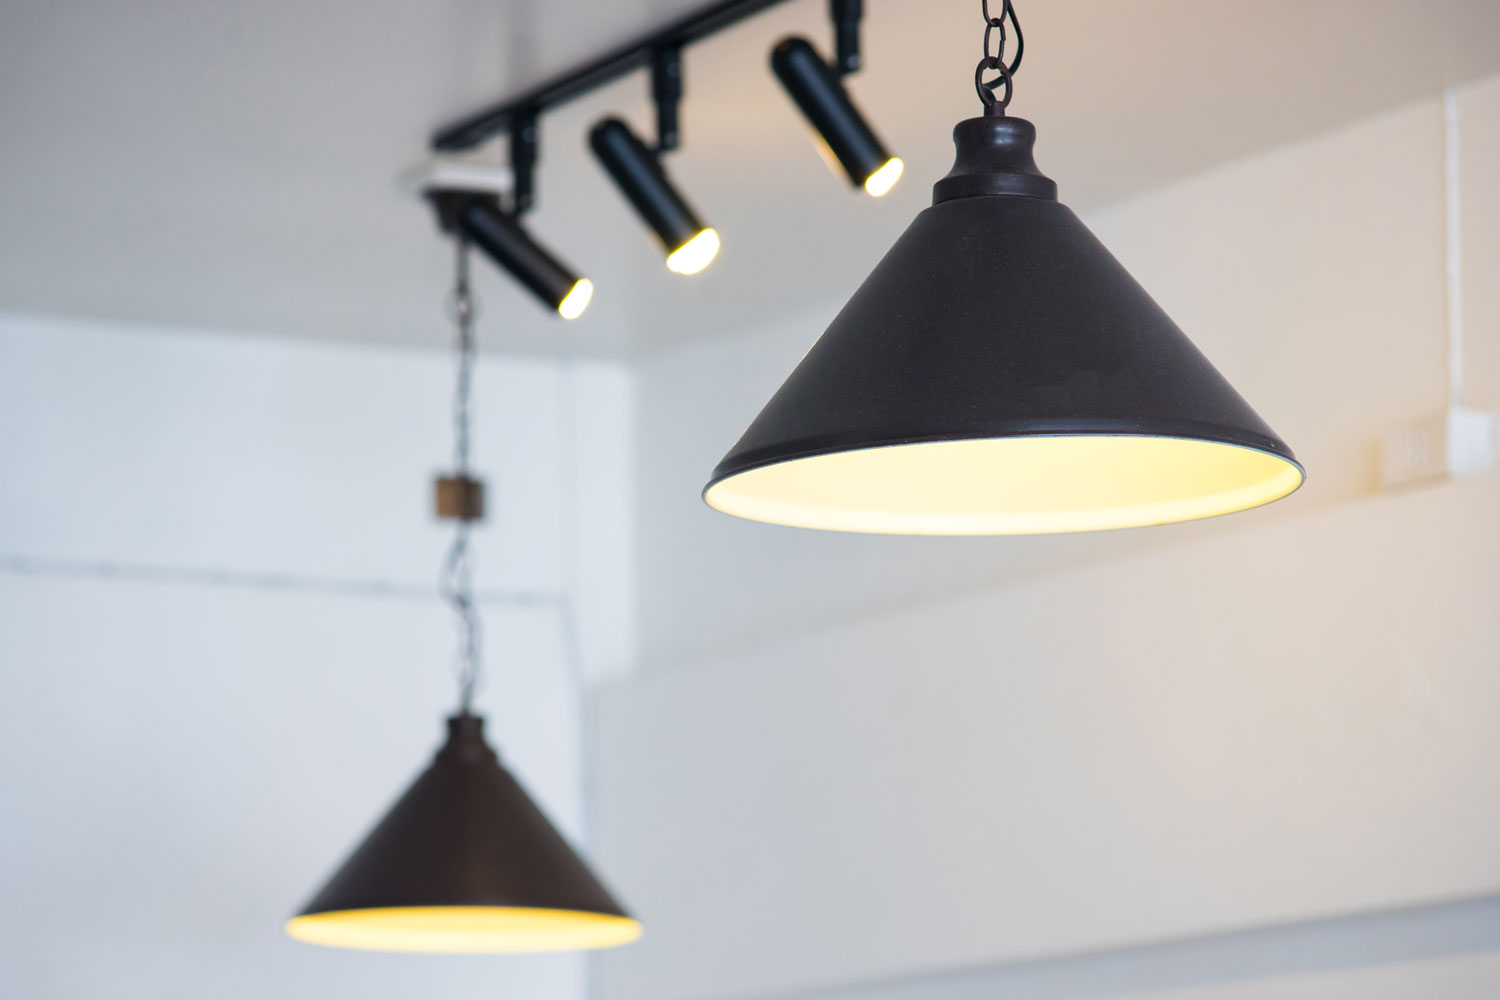 Dangling ceiling lights inside a photography studio